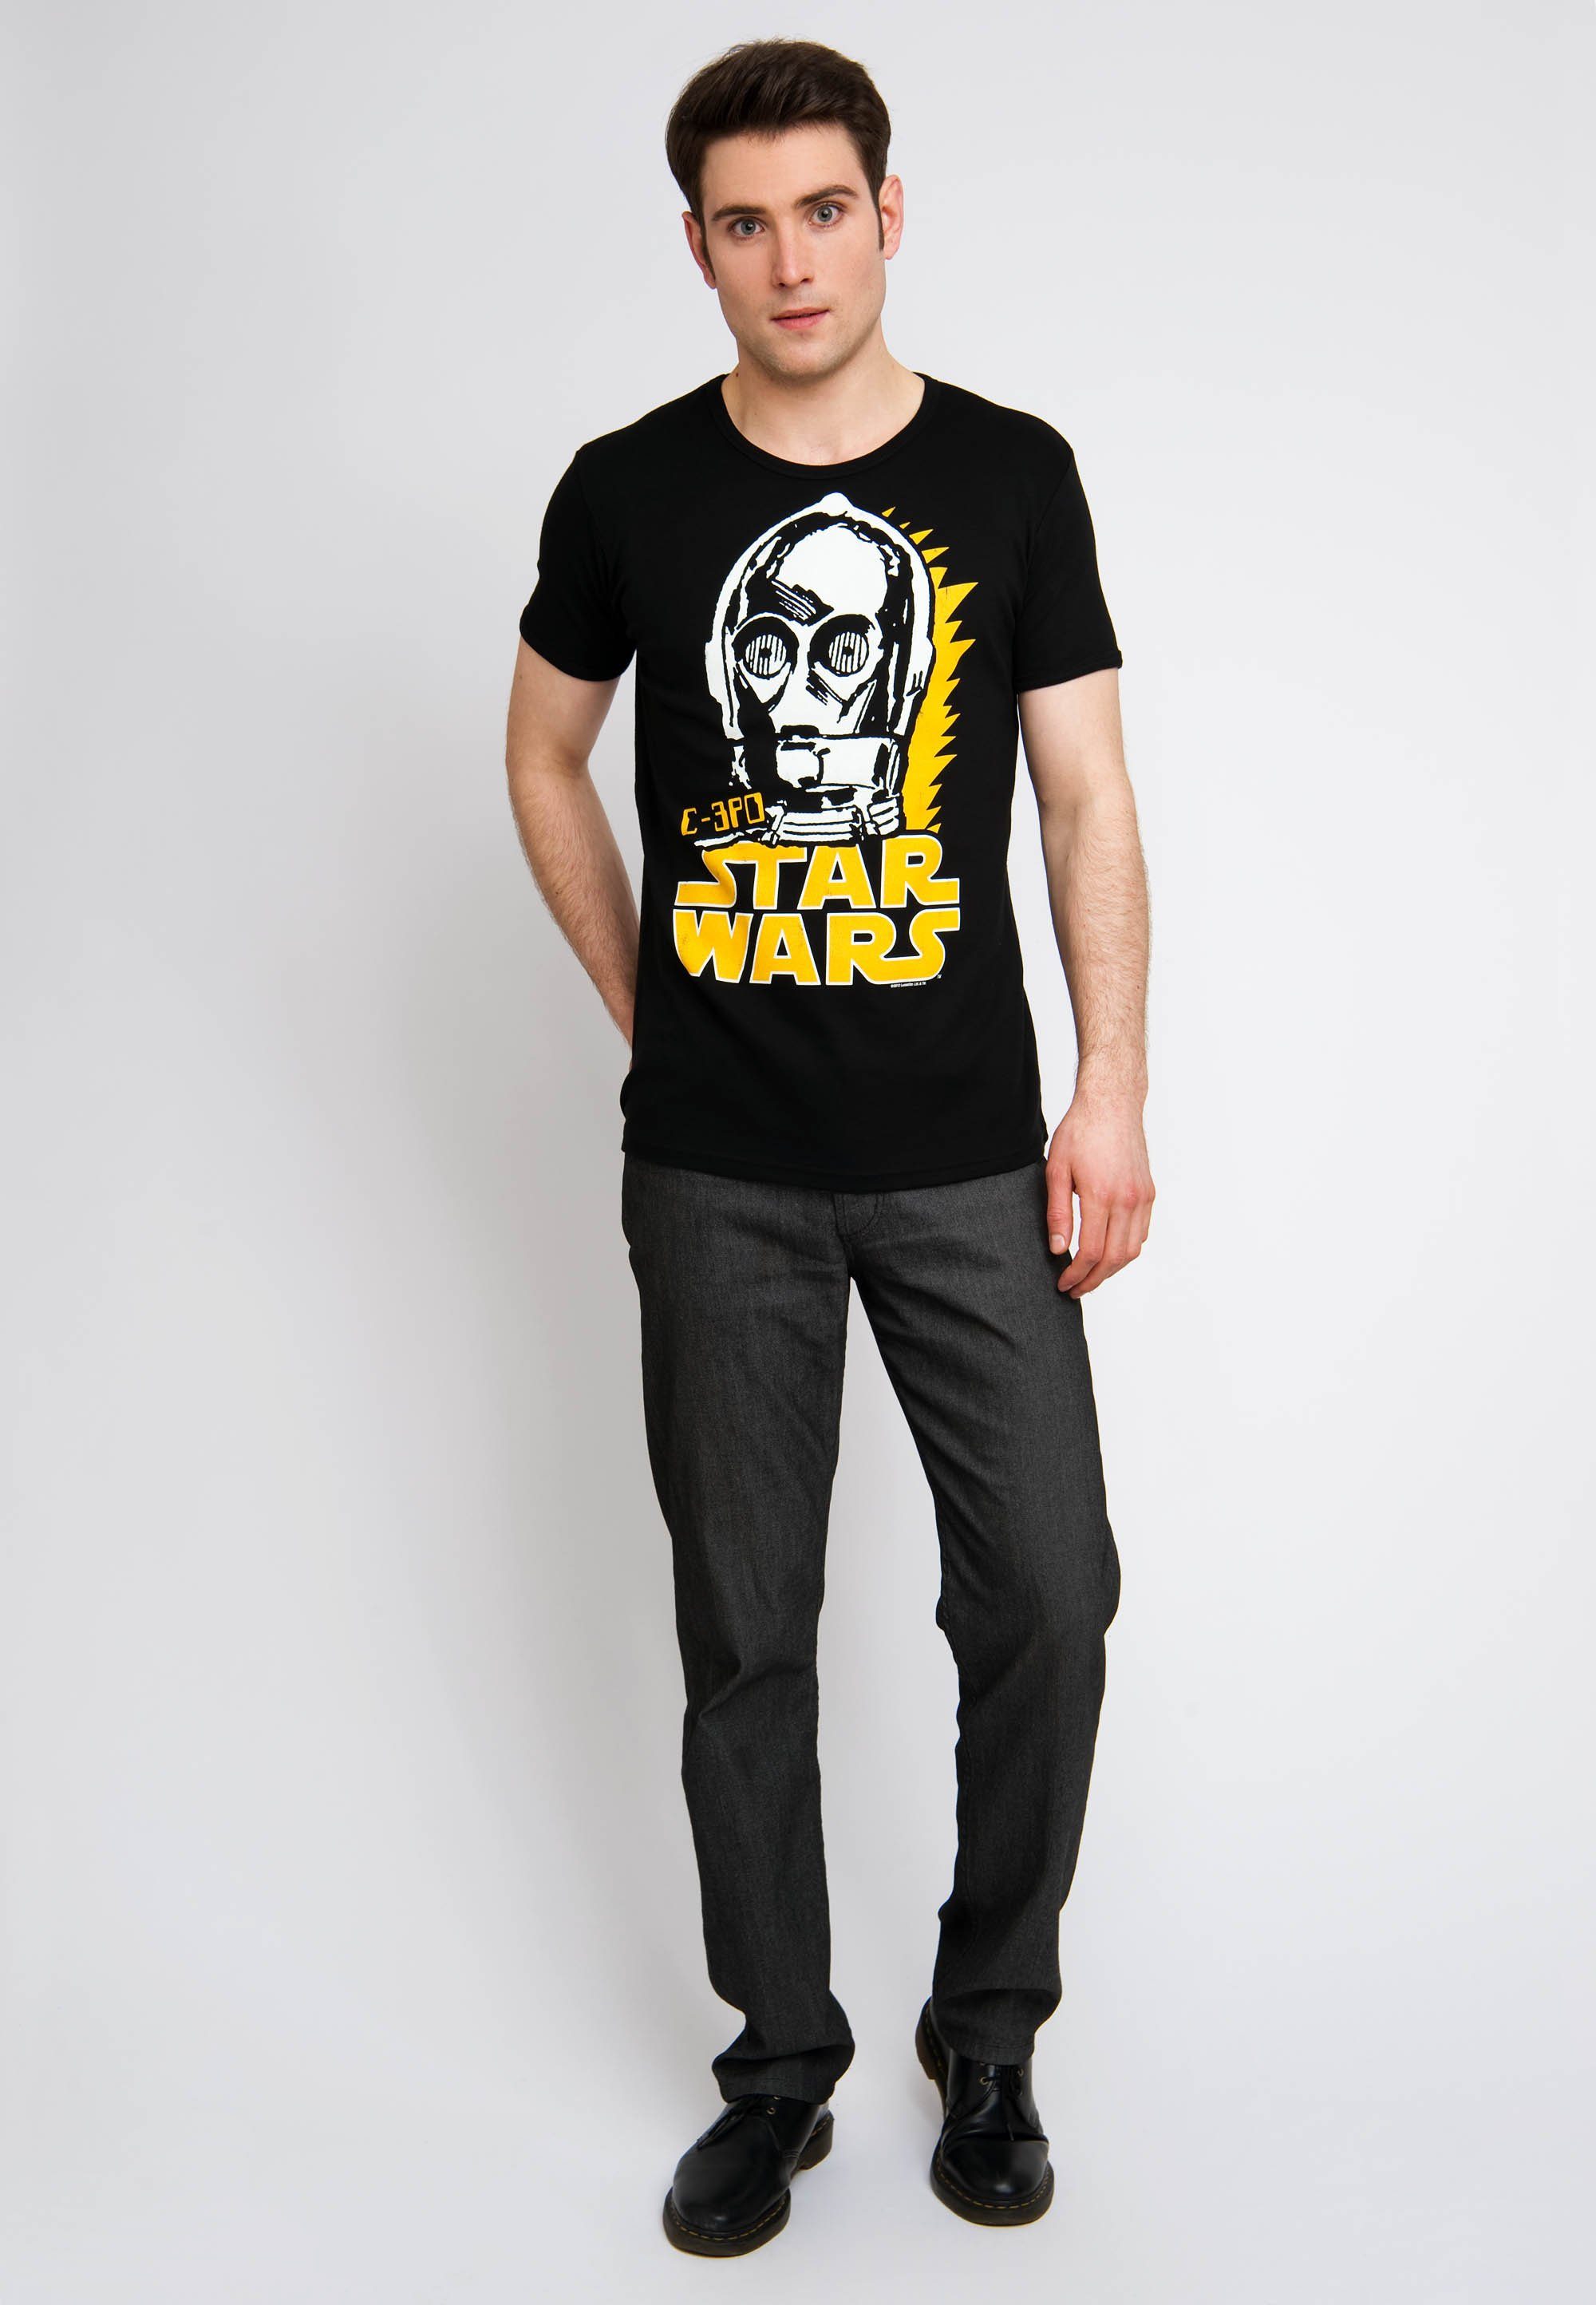 LOGOSHIRT T-Shirt mit C-3PO C-3PO-Print